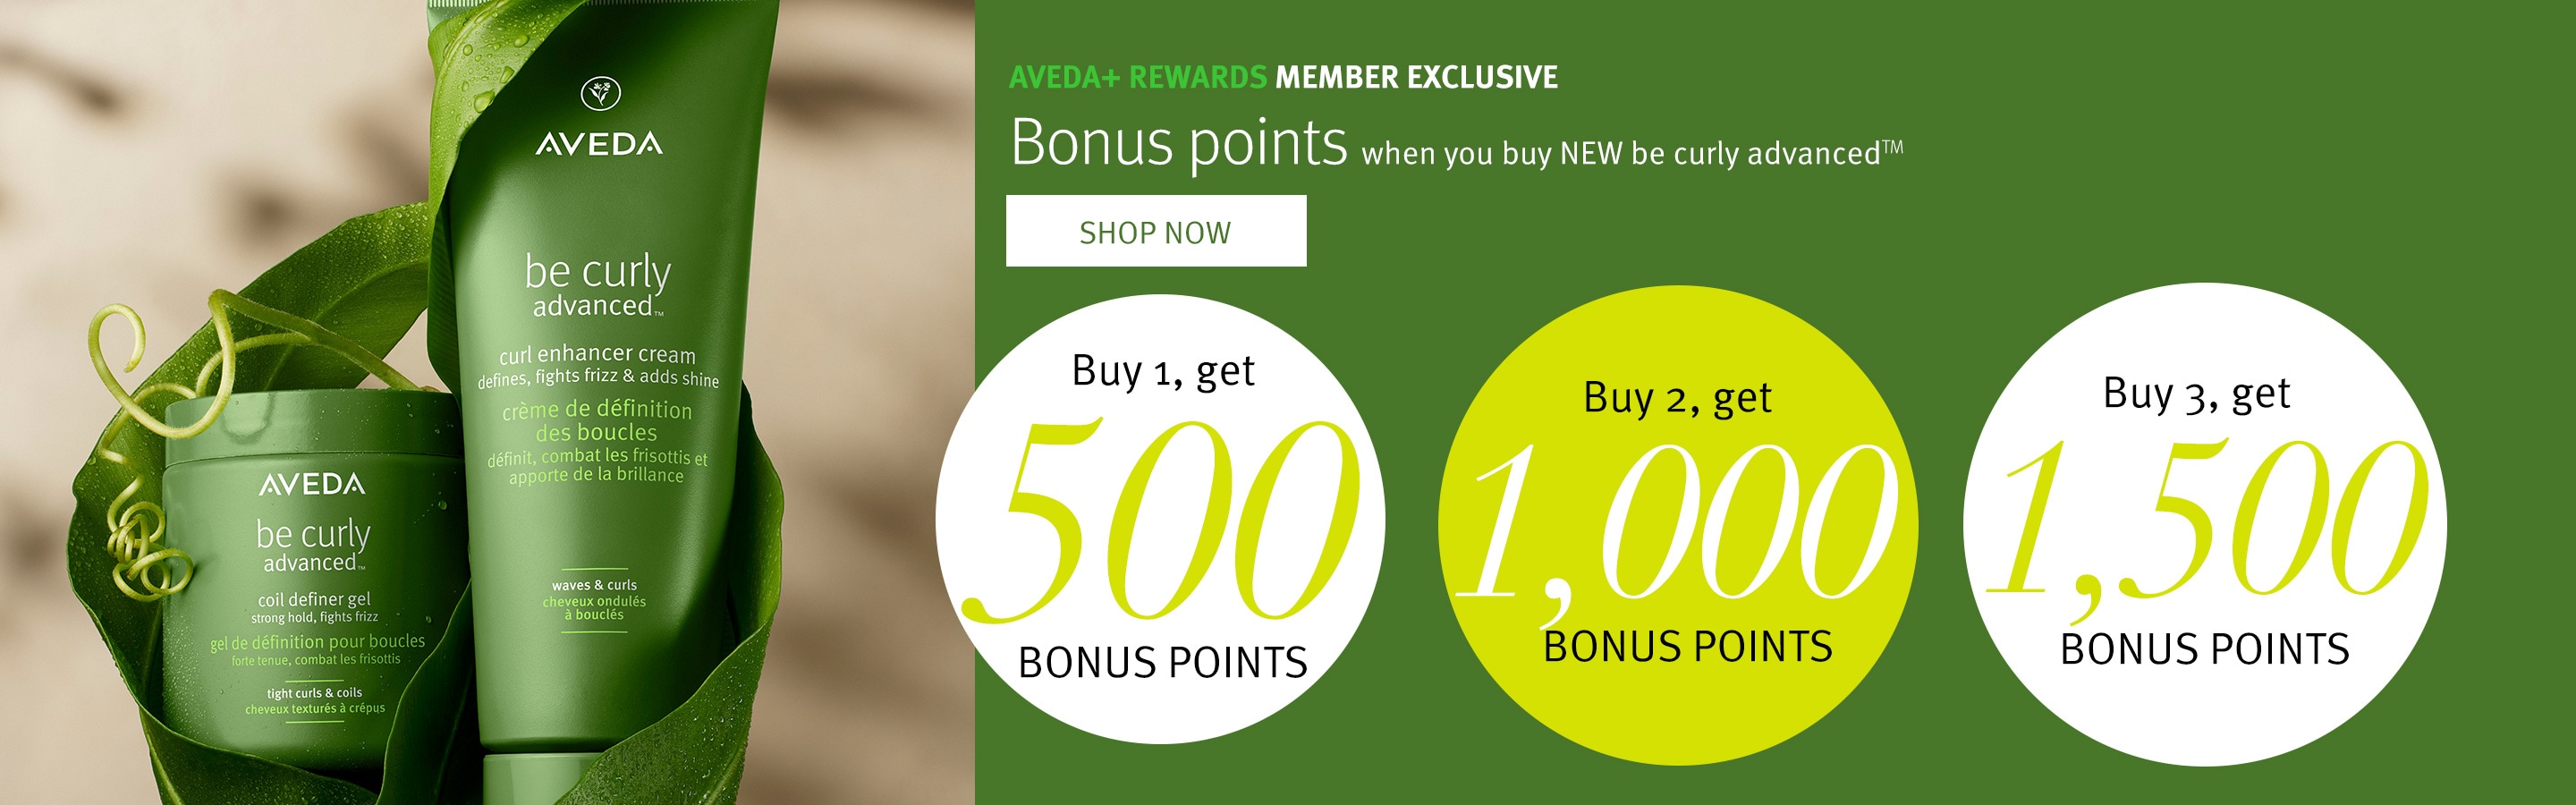 Aveda+ loyalty members receive bonus points